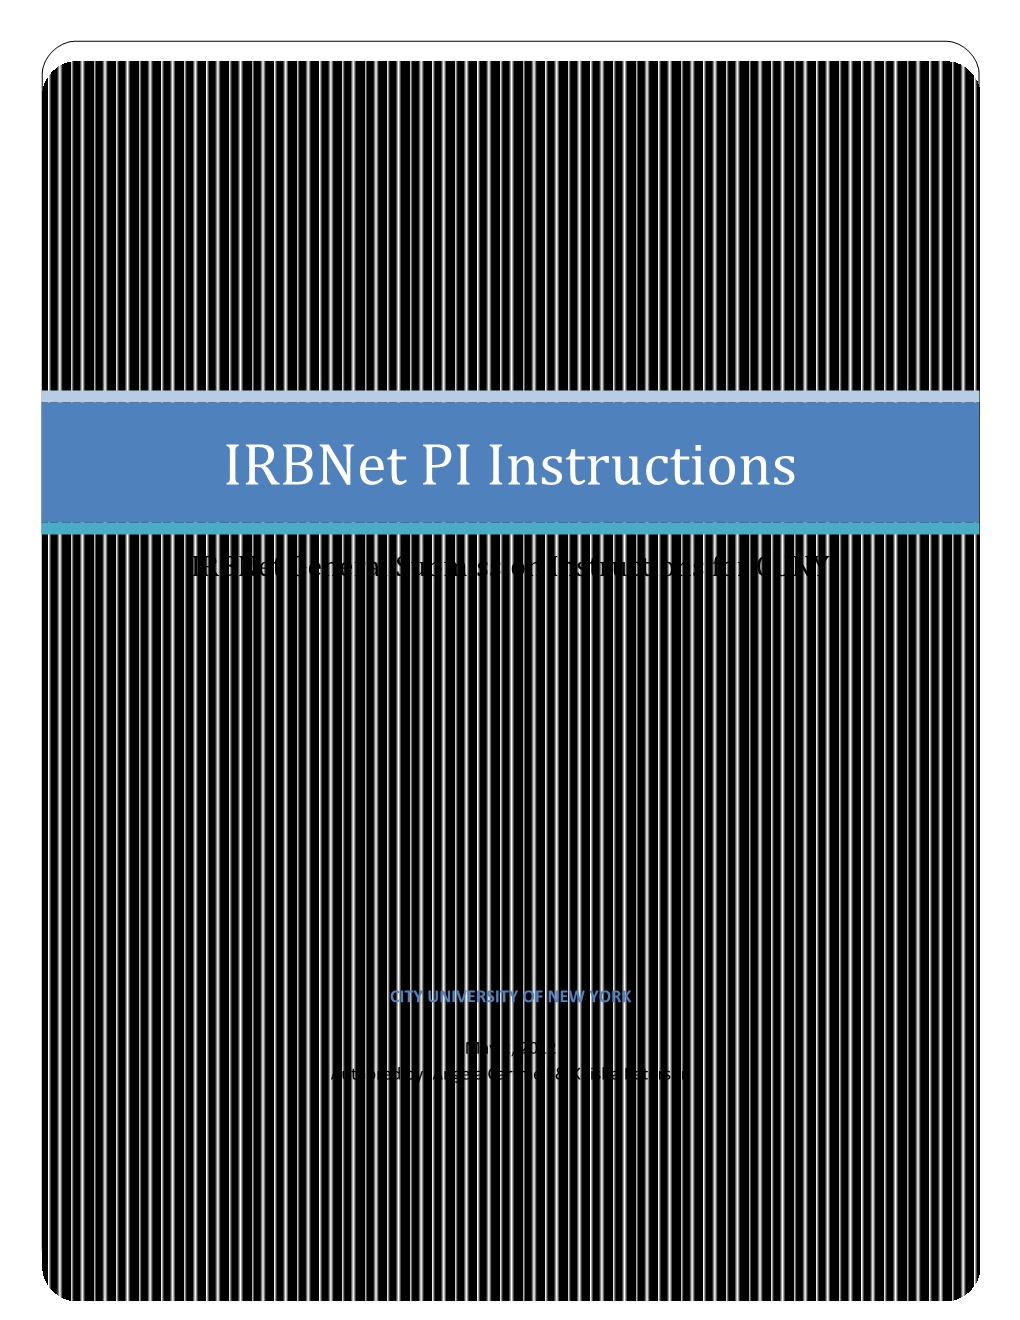 Irbnet PI Instructions